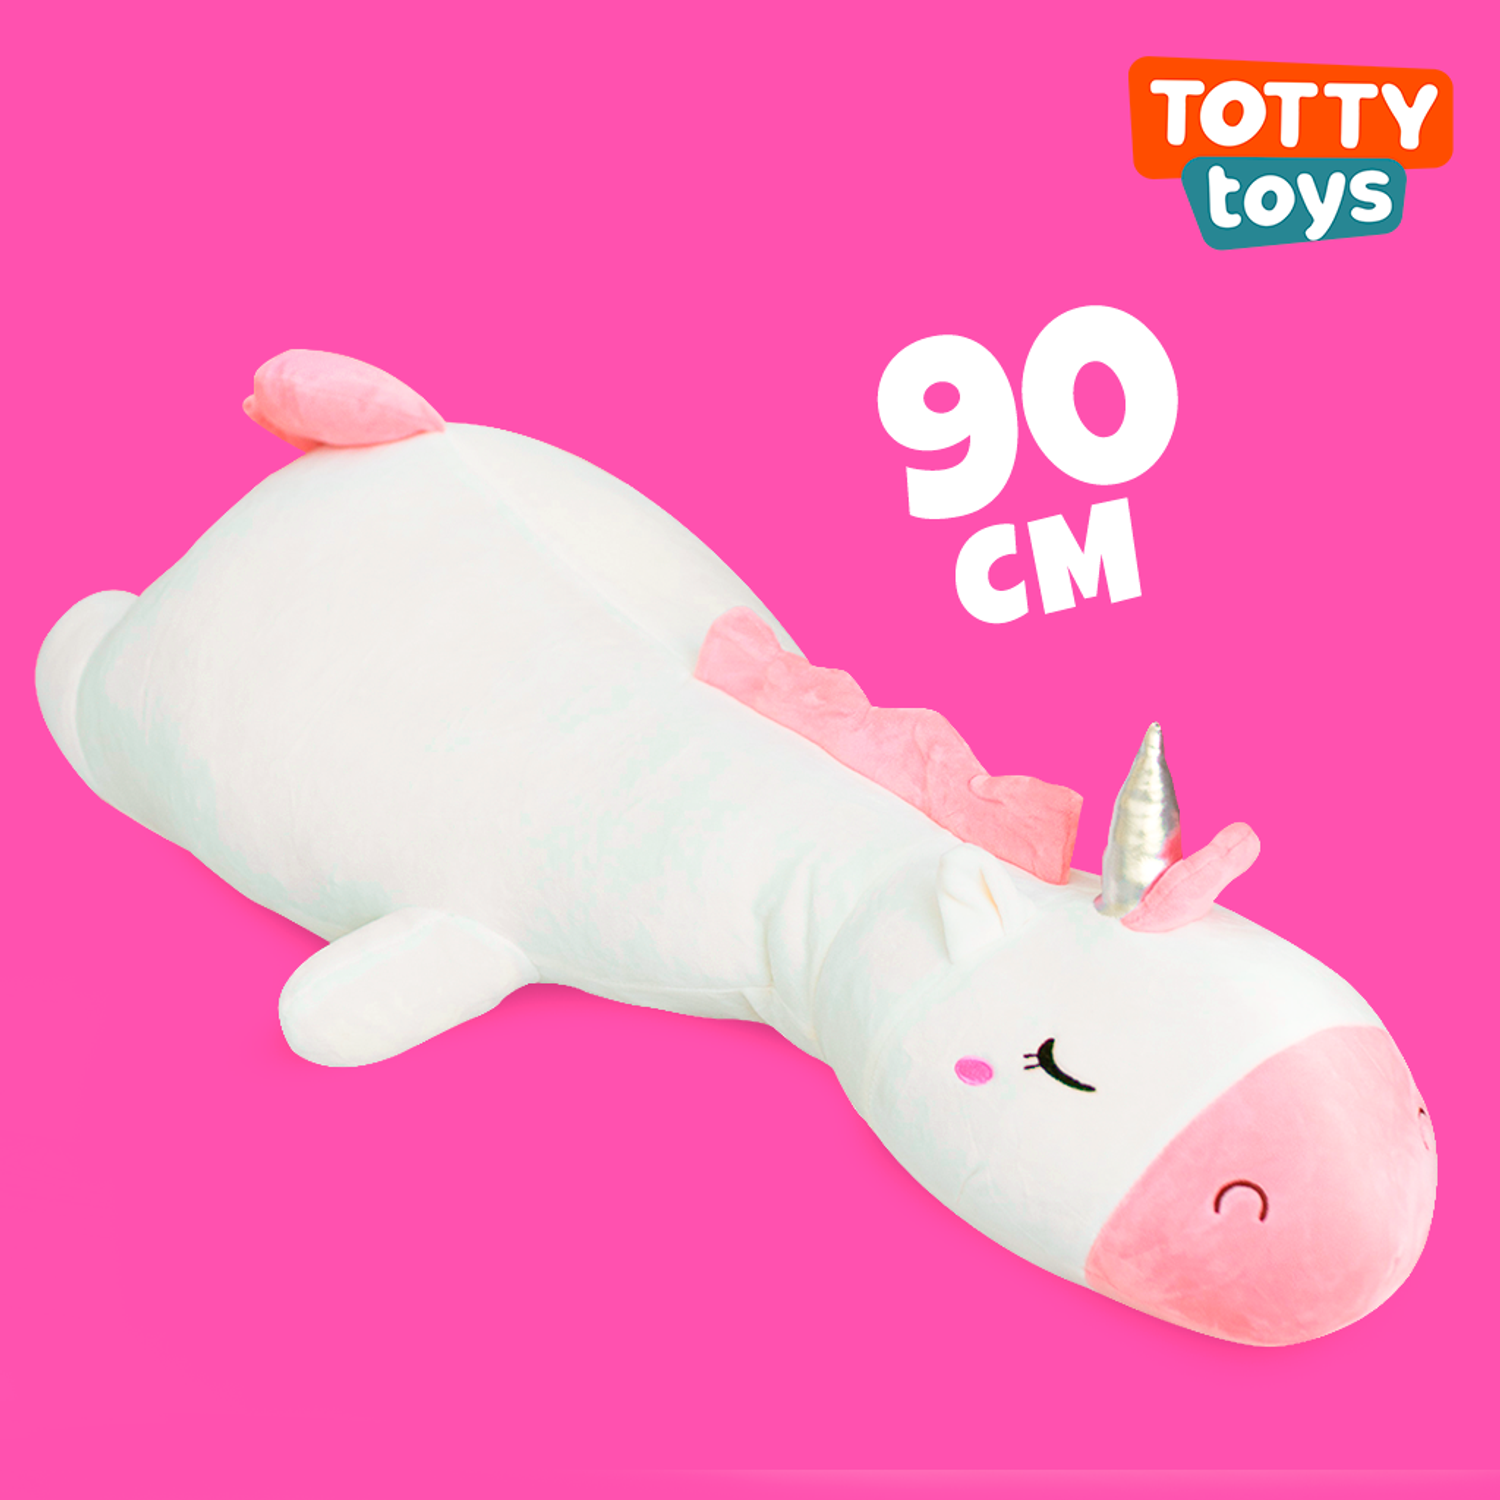 Мягкая игрушка подушка TOTTY TOYS единорог 90 см антистресс развивающая обнимашка - фото 1